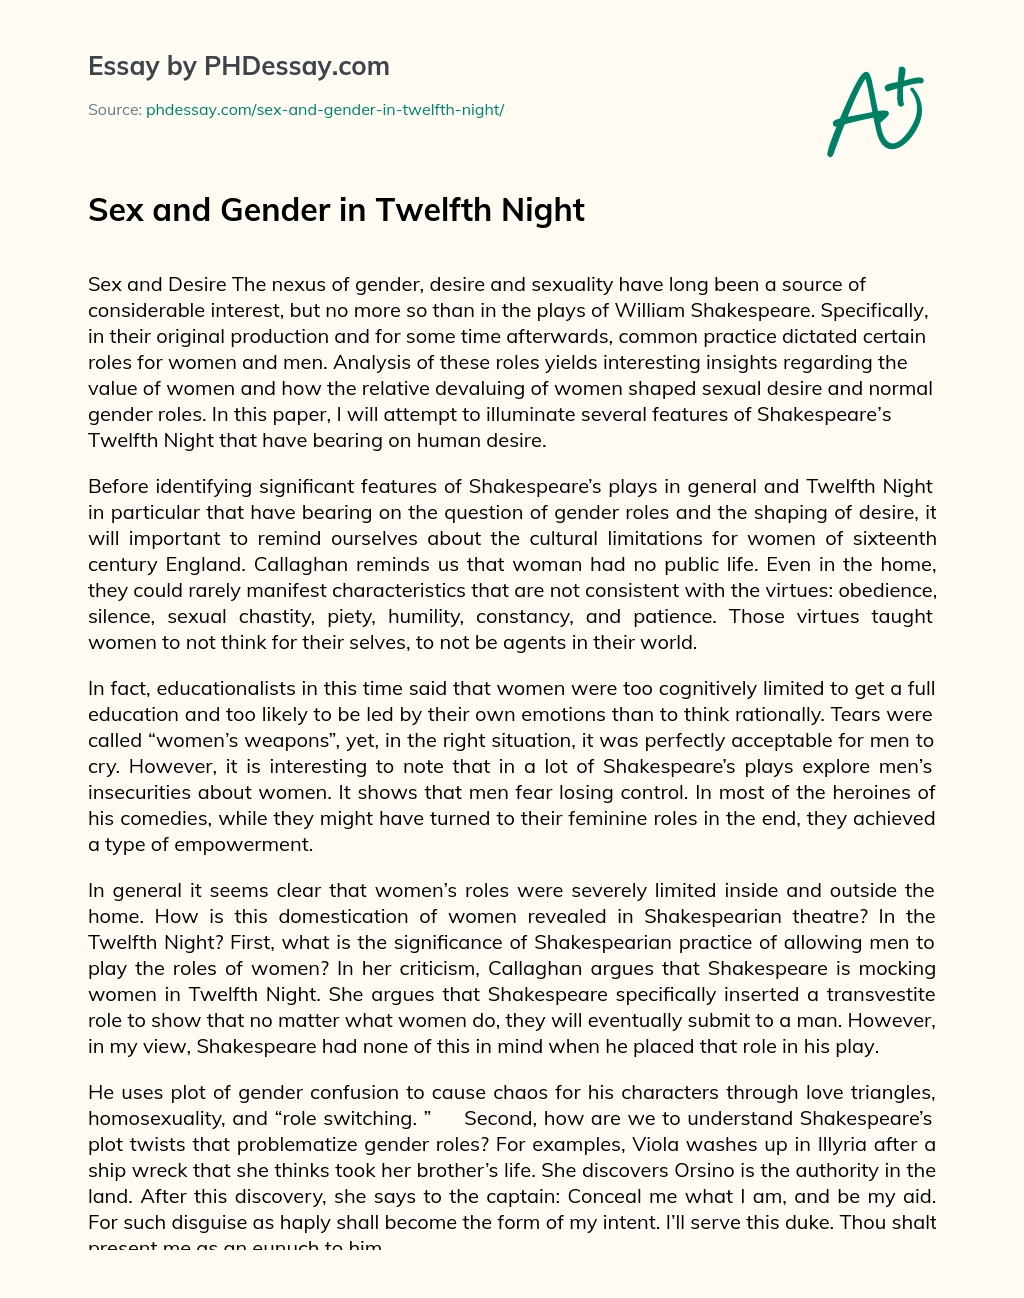 Sex and Gender in Twelfth Night essay